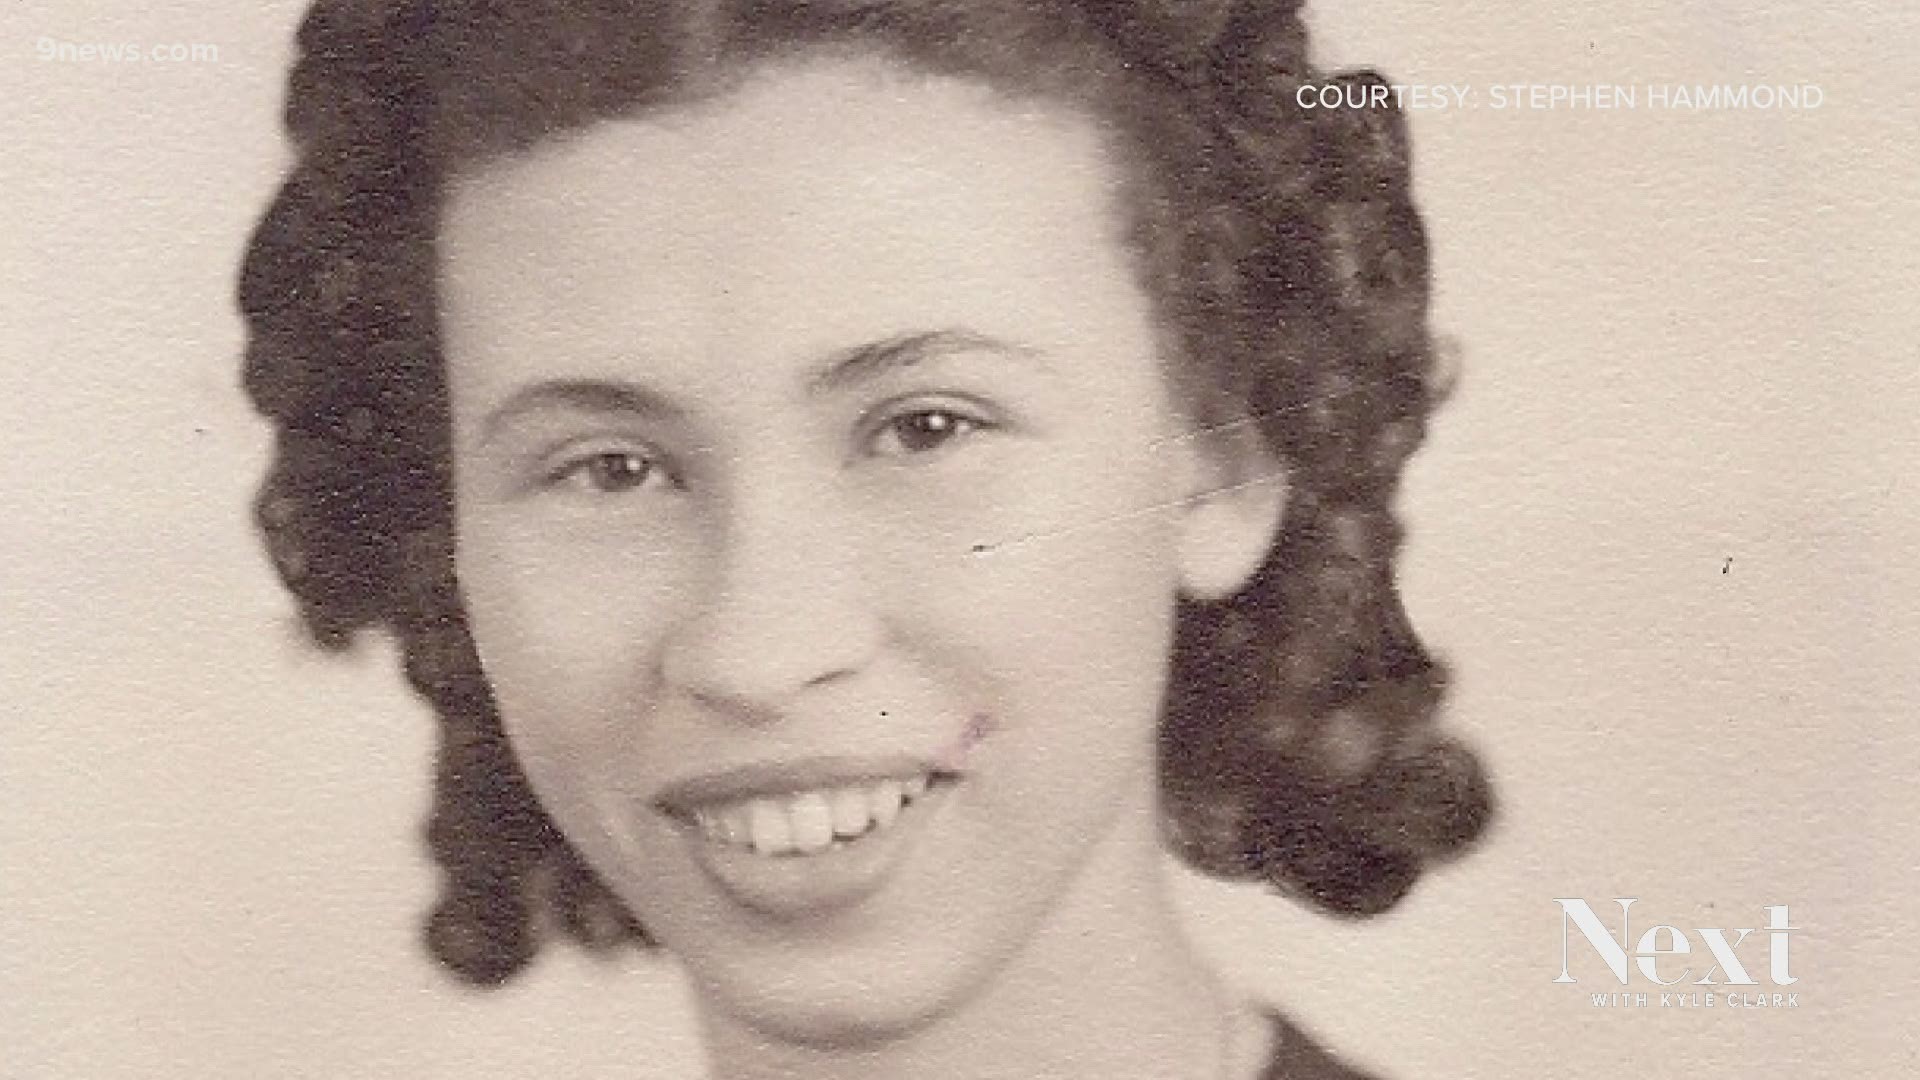 Zipporah "Zippy" Hammond made history by graduating from CU's School of Nursing in 1946.